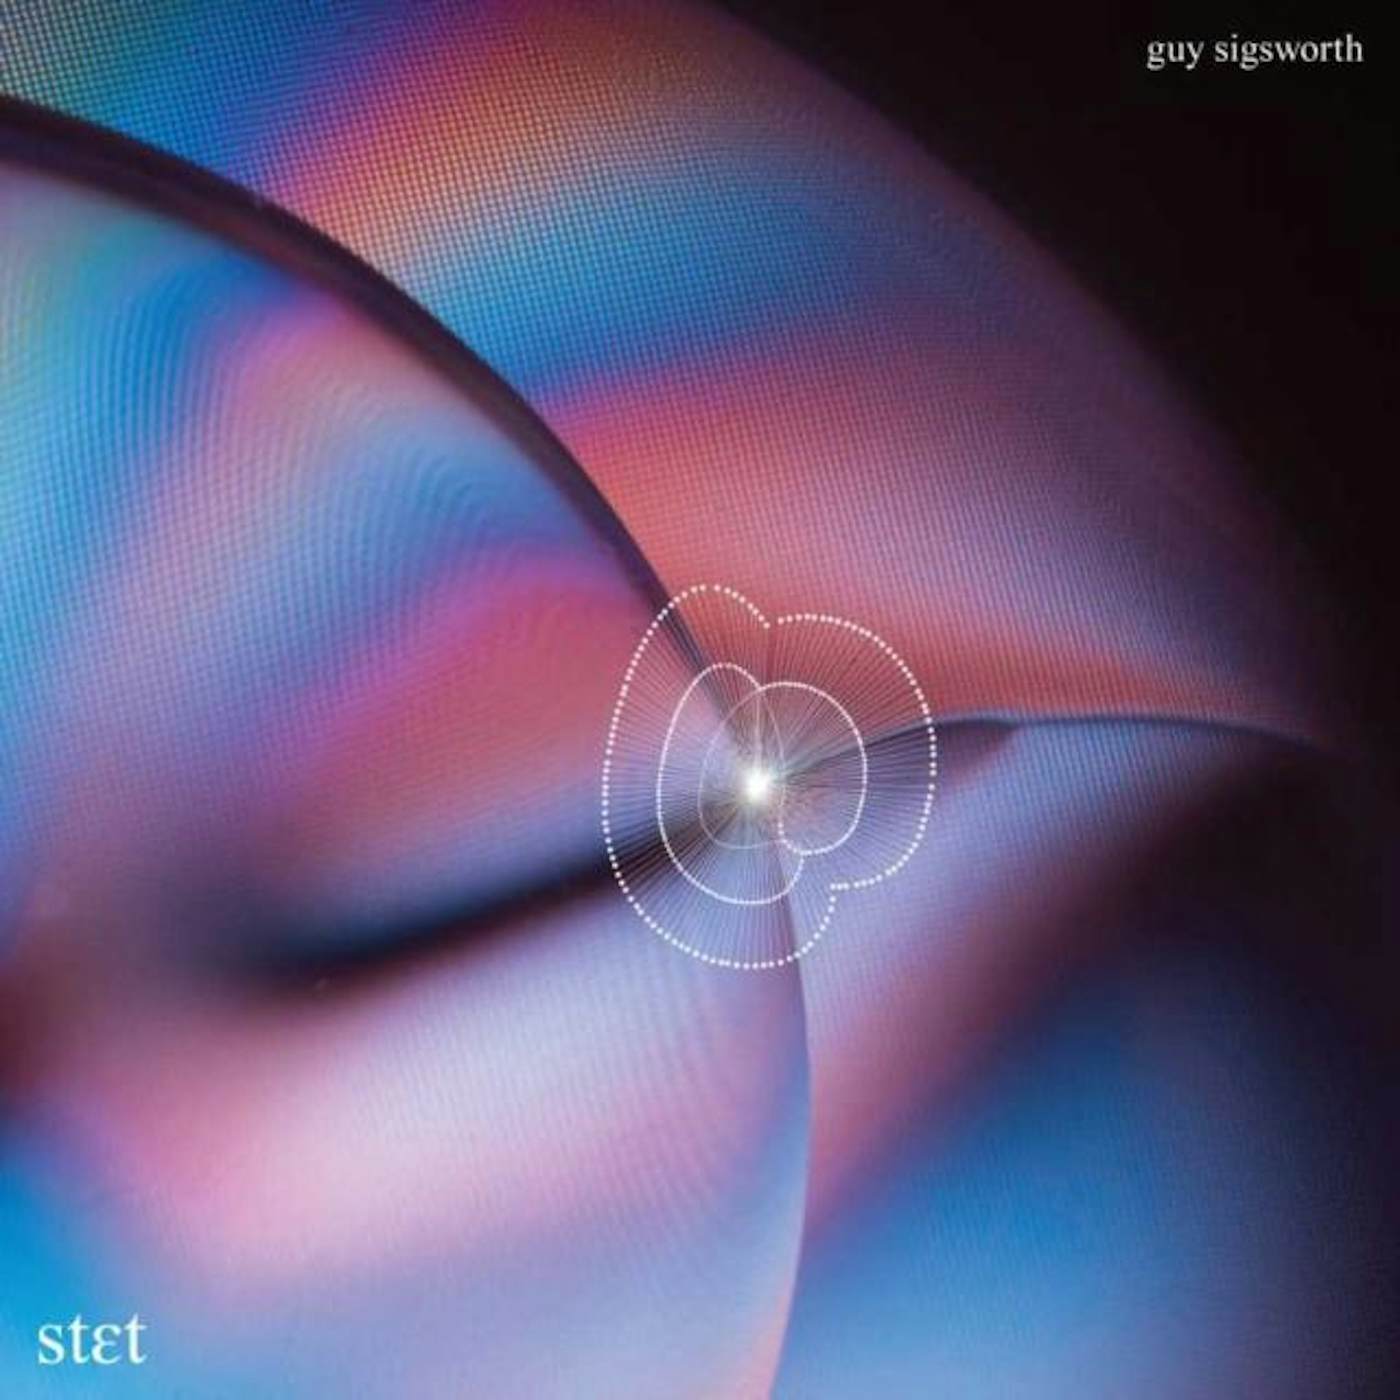 Guy Sigsworth LP Vinyl Record - Stet